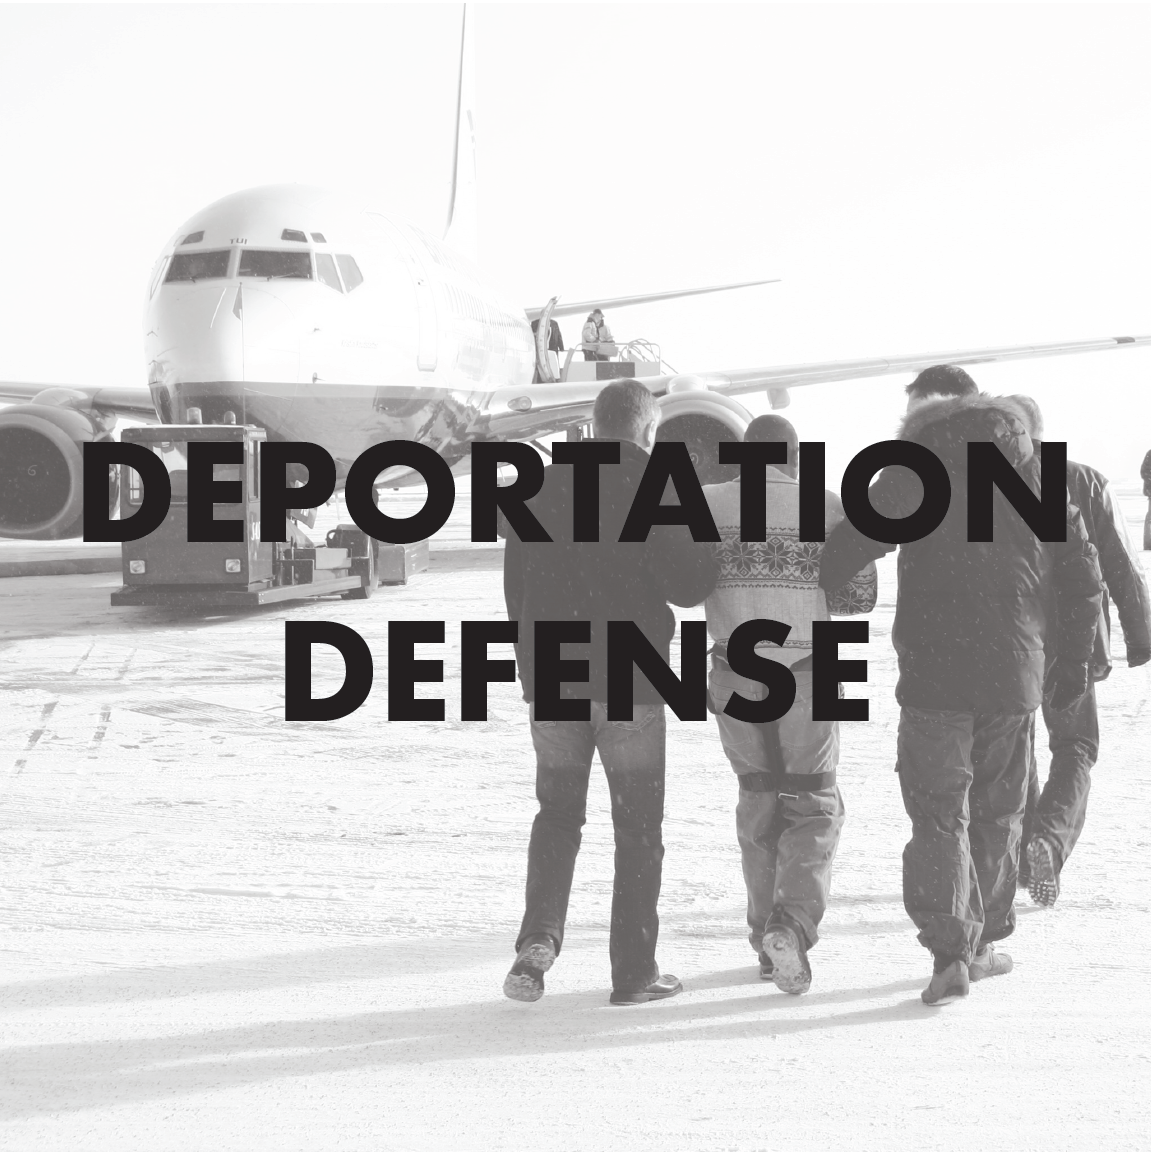 Deportation Defense